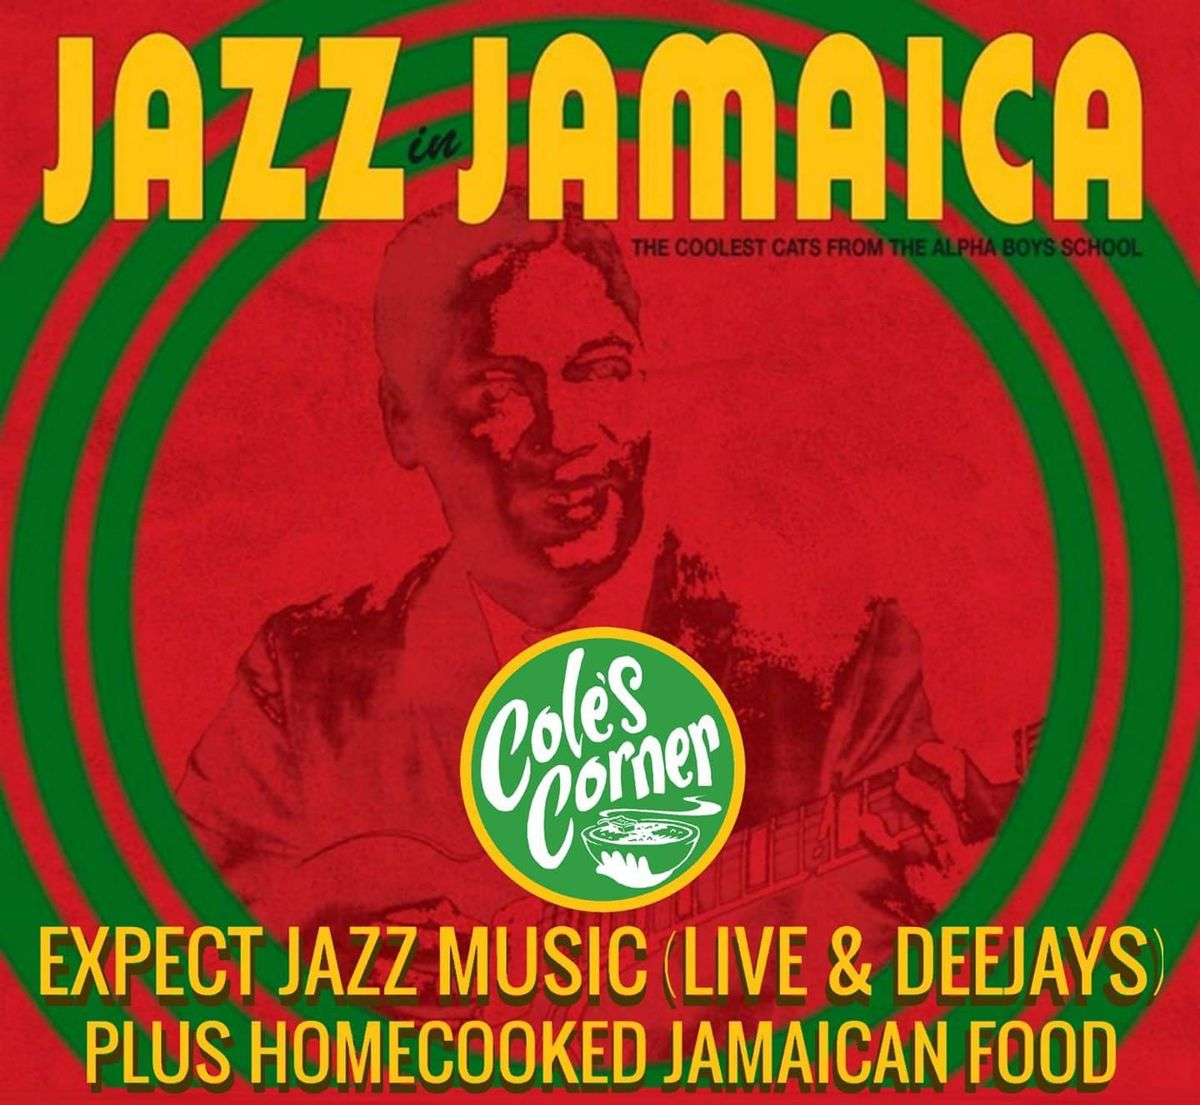 Cole's Corner presents Jazz & Jamaican